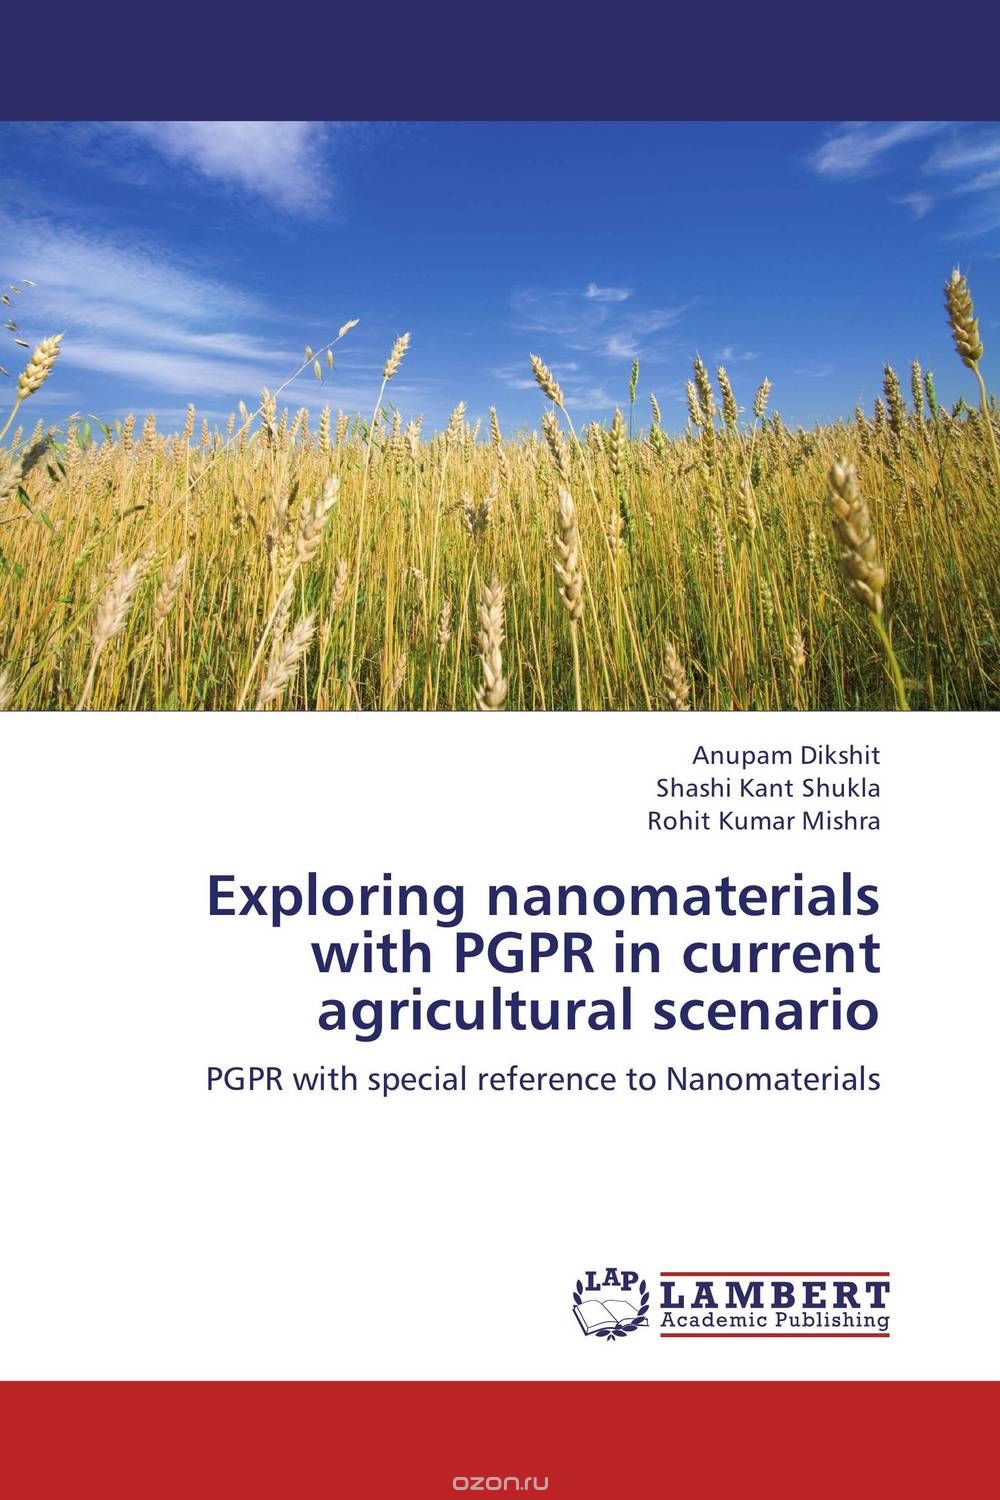 Скачать книгу "Exploring nanomaterials with PGPR in current agricultural scenario"